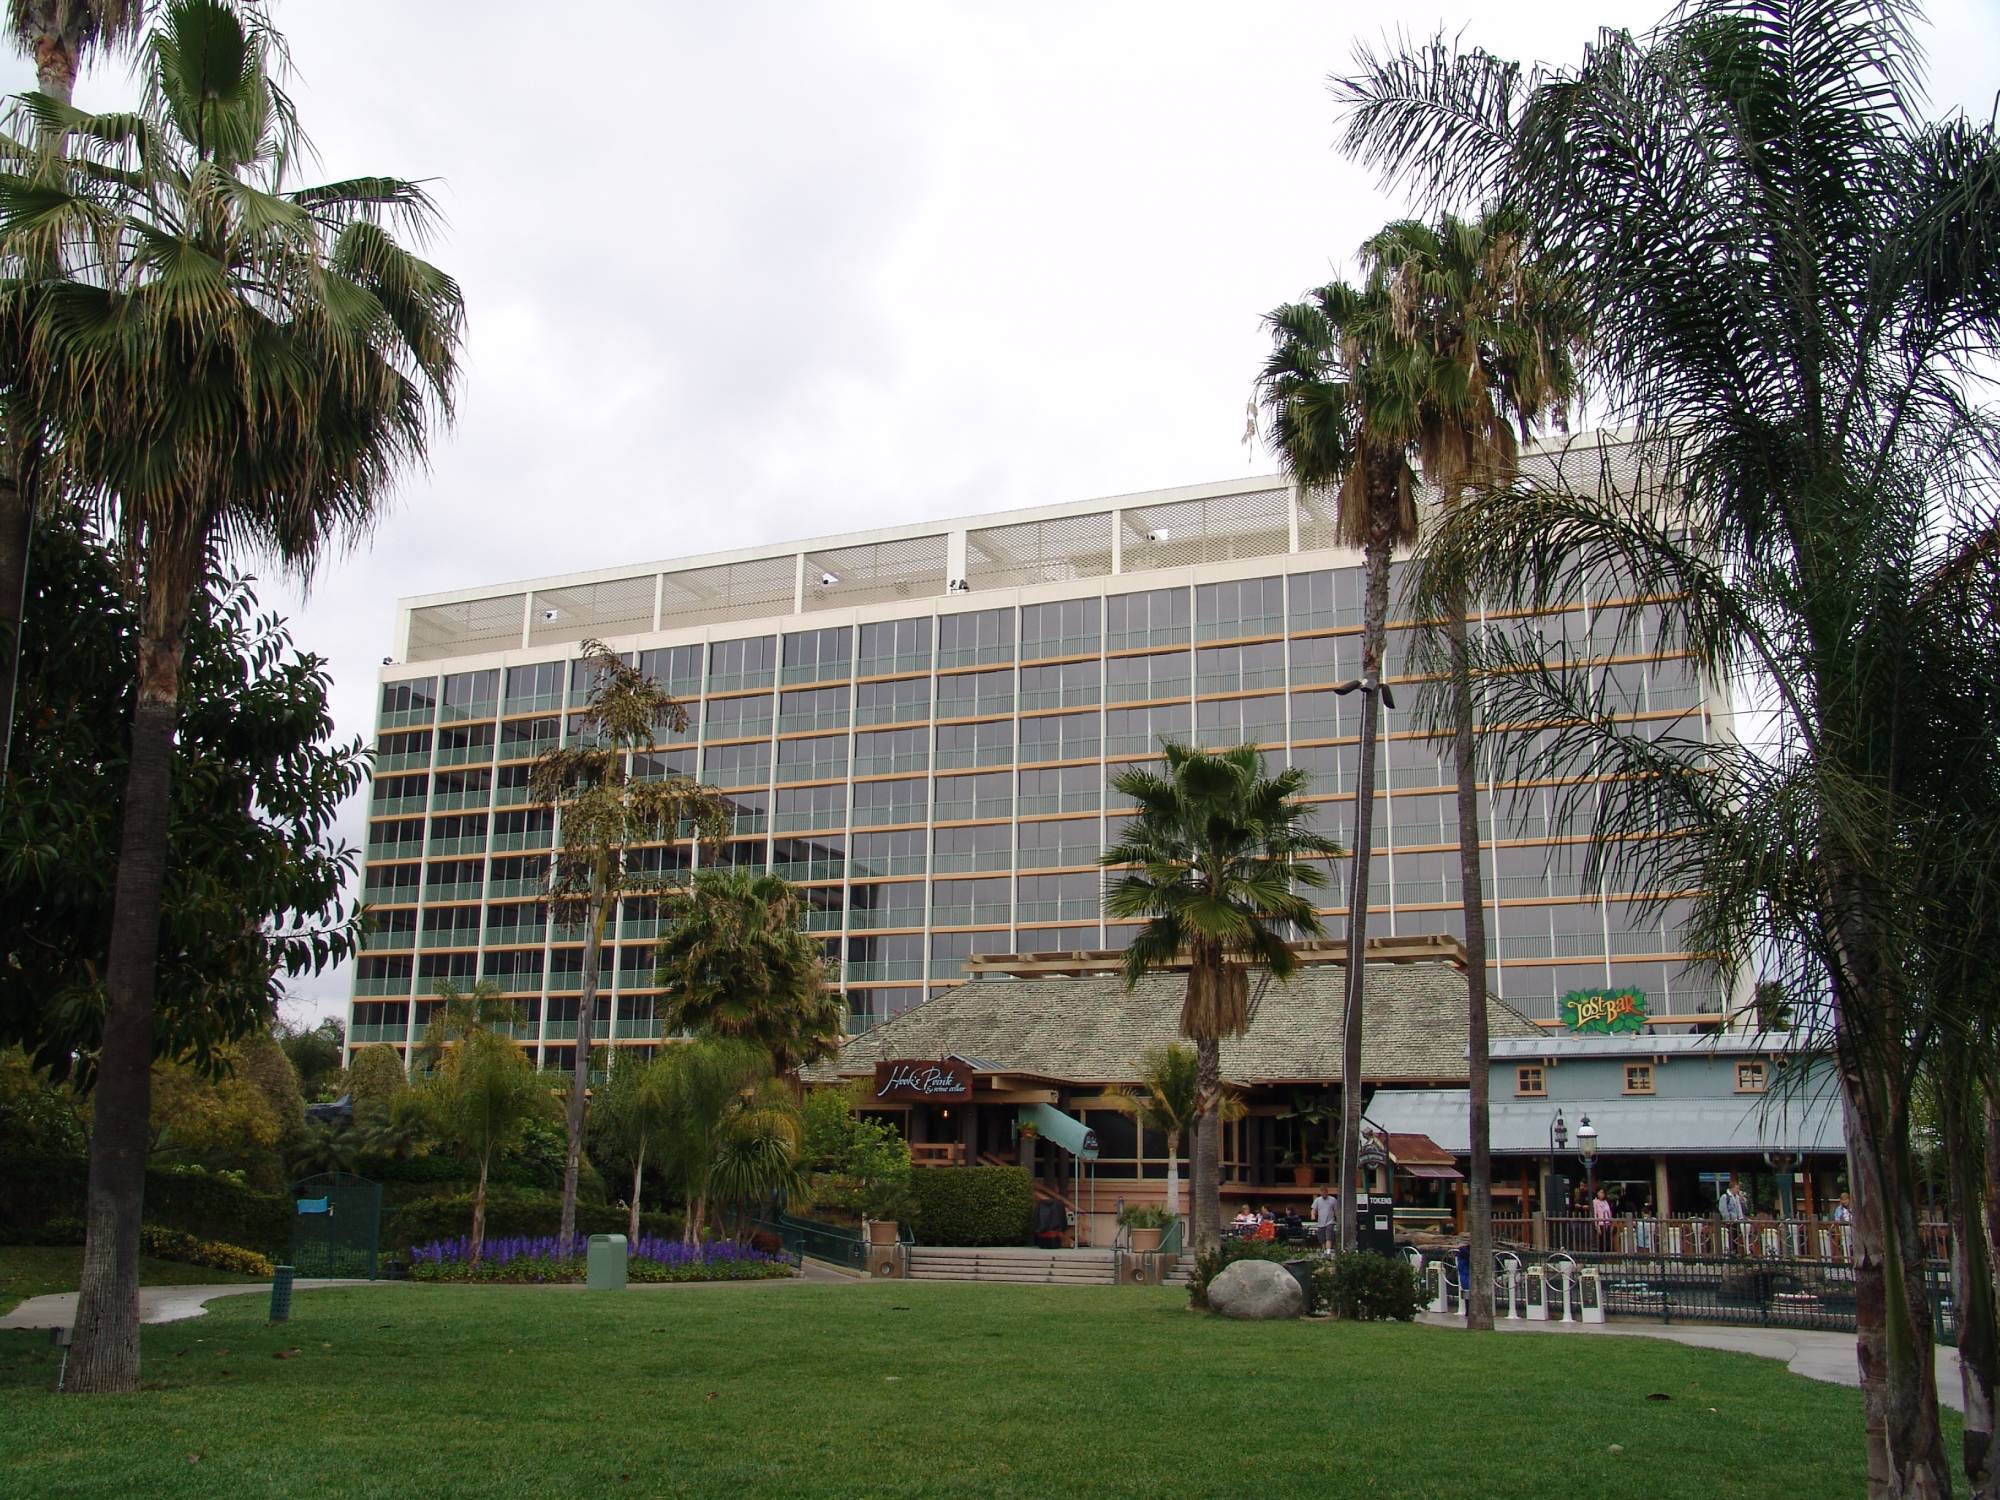 Disneyland Hotel - Sierra Tower